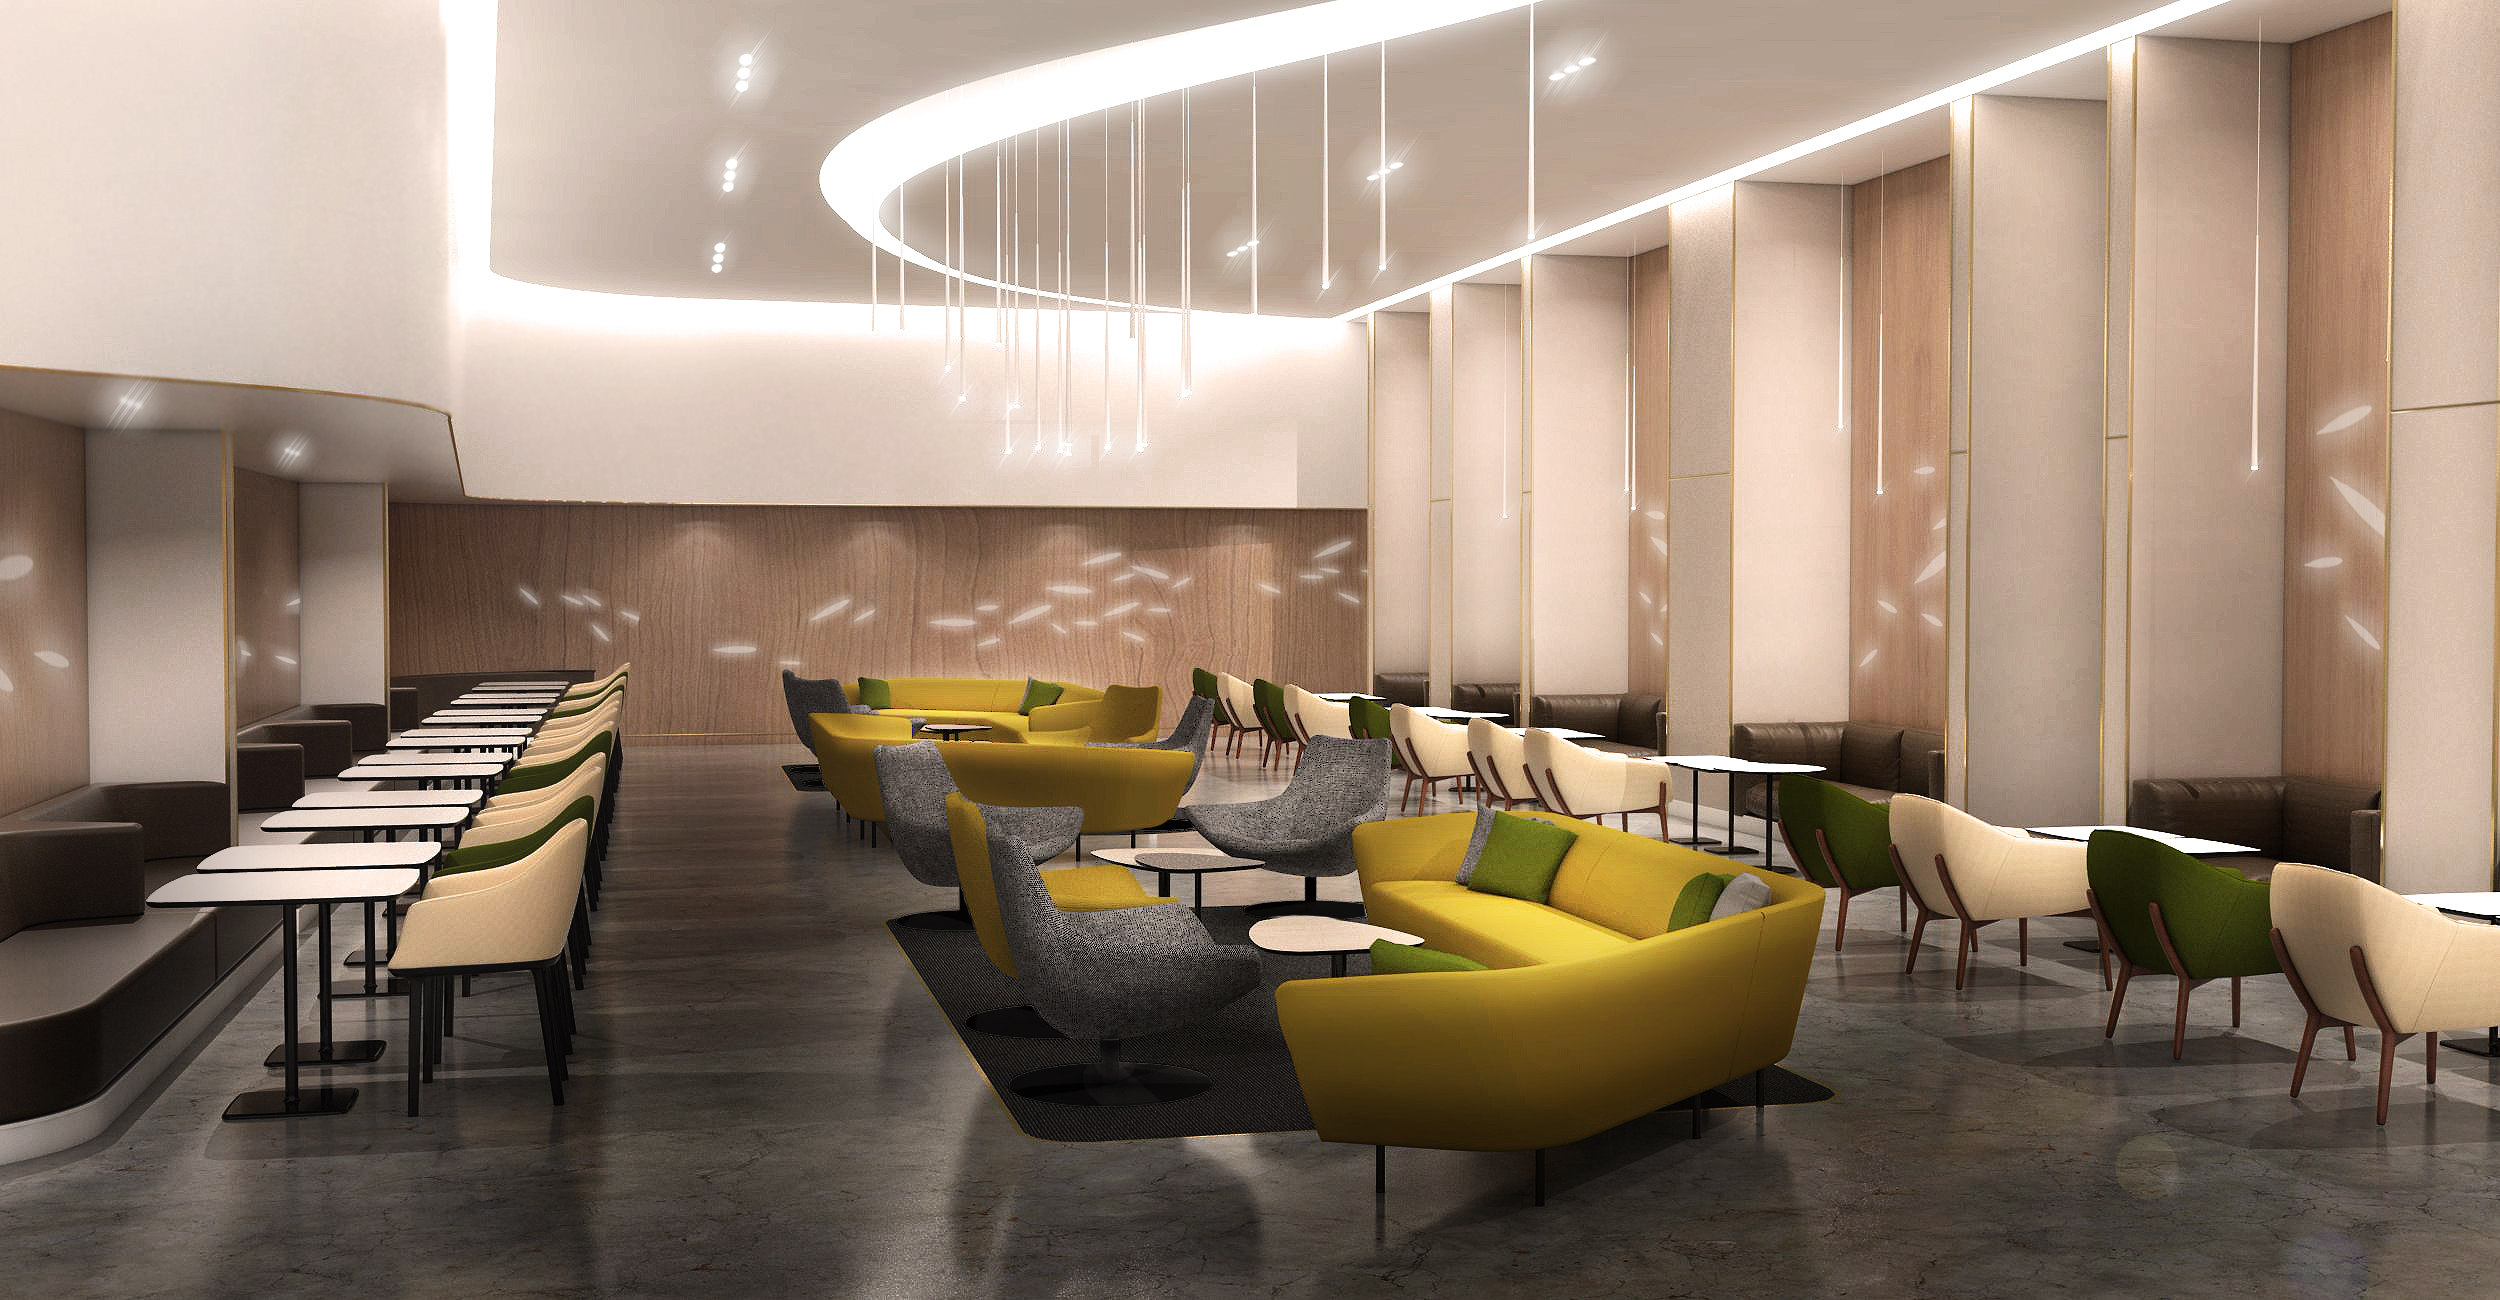 Brandimage designed the VIP lounge for the Daegu Shinsegae department store in South Korea